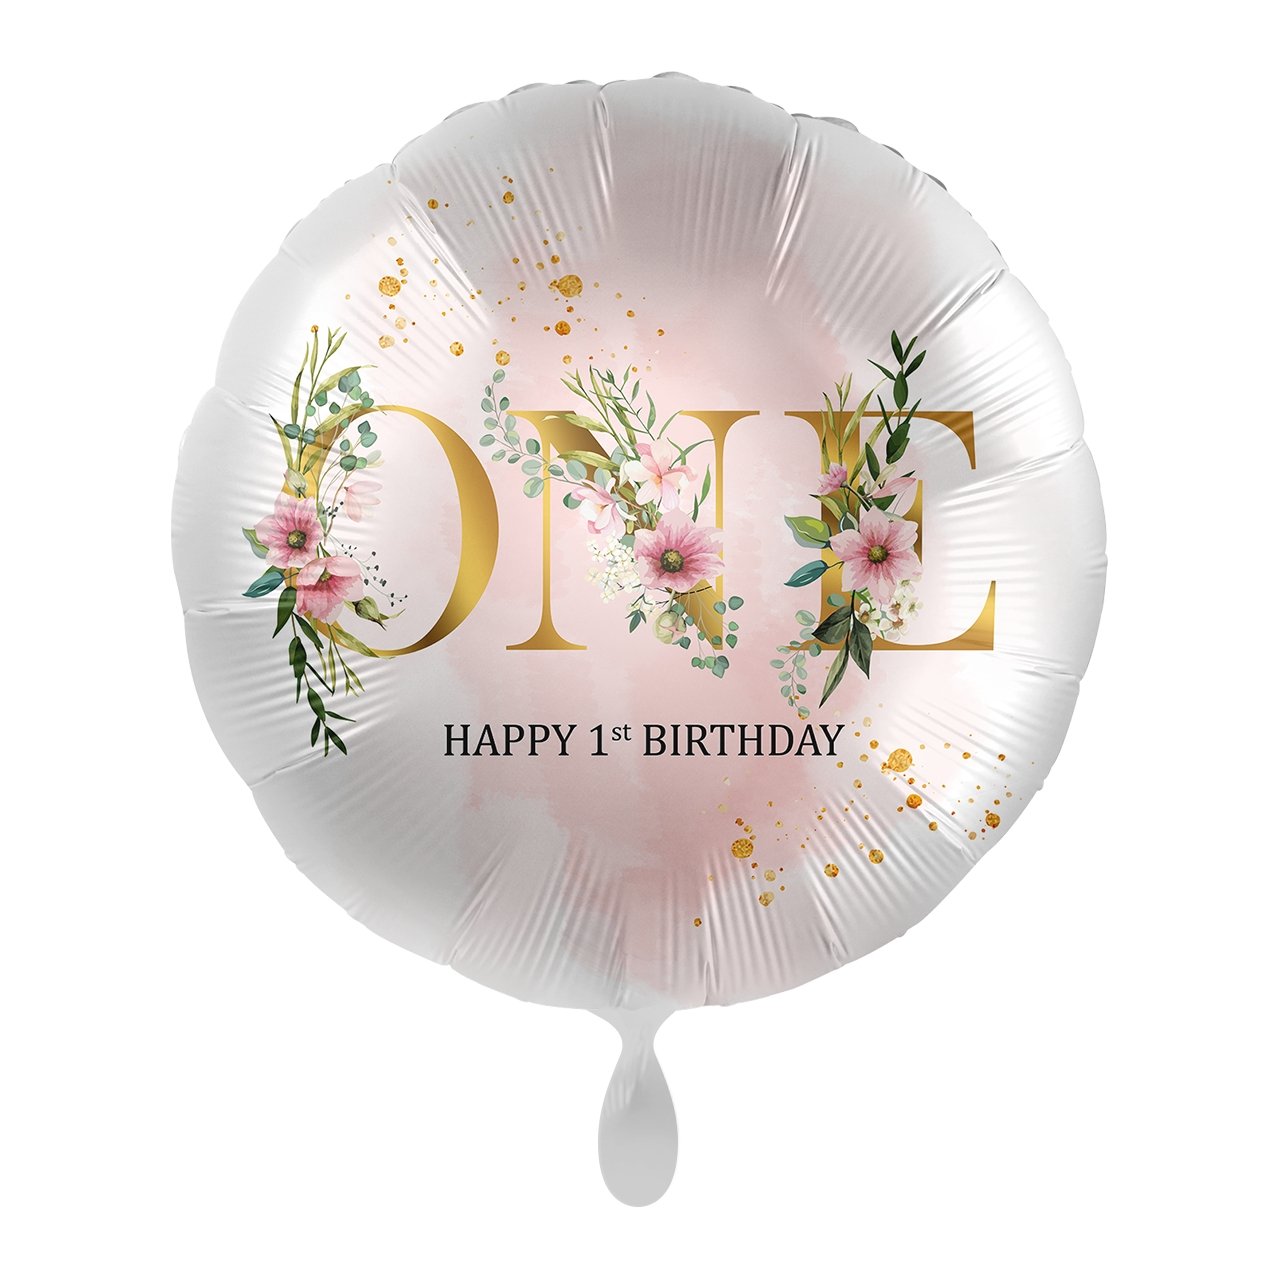 Folienballon "Happy 1st Birthday" 43cm - Party im Karton